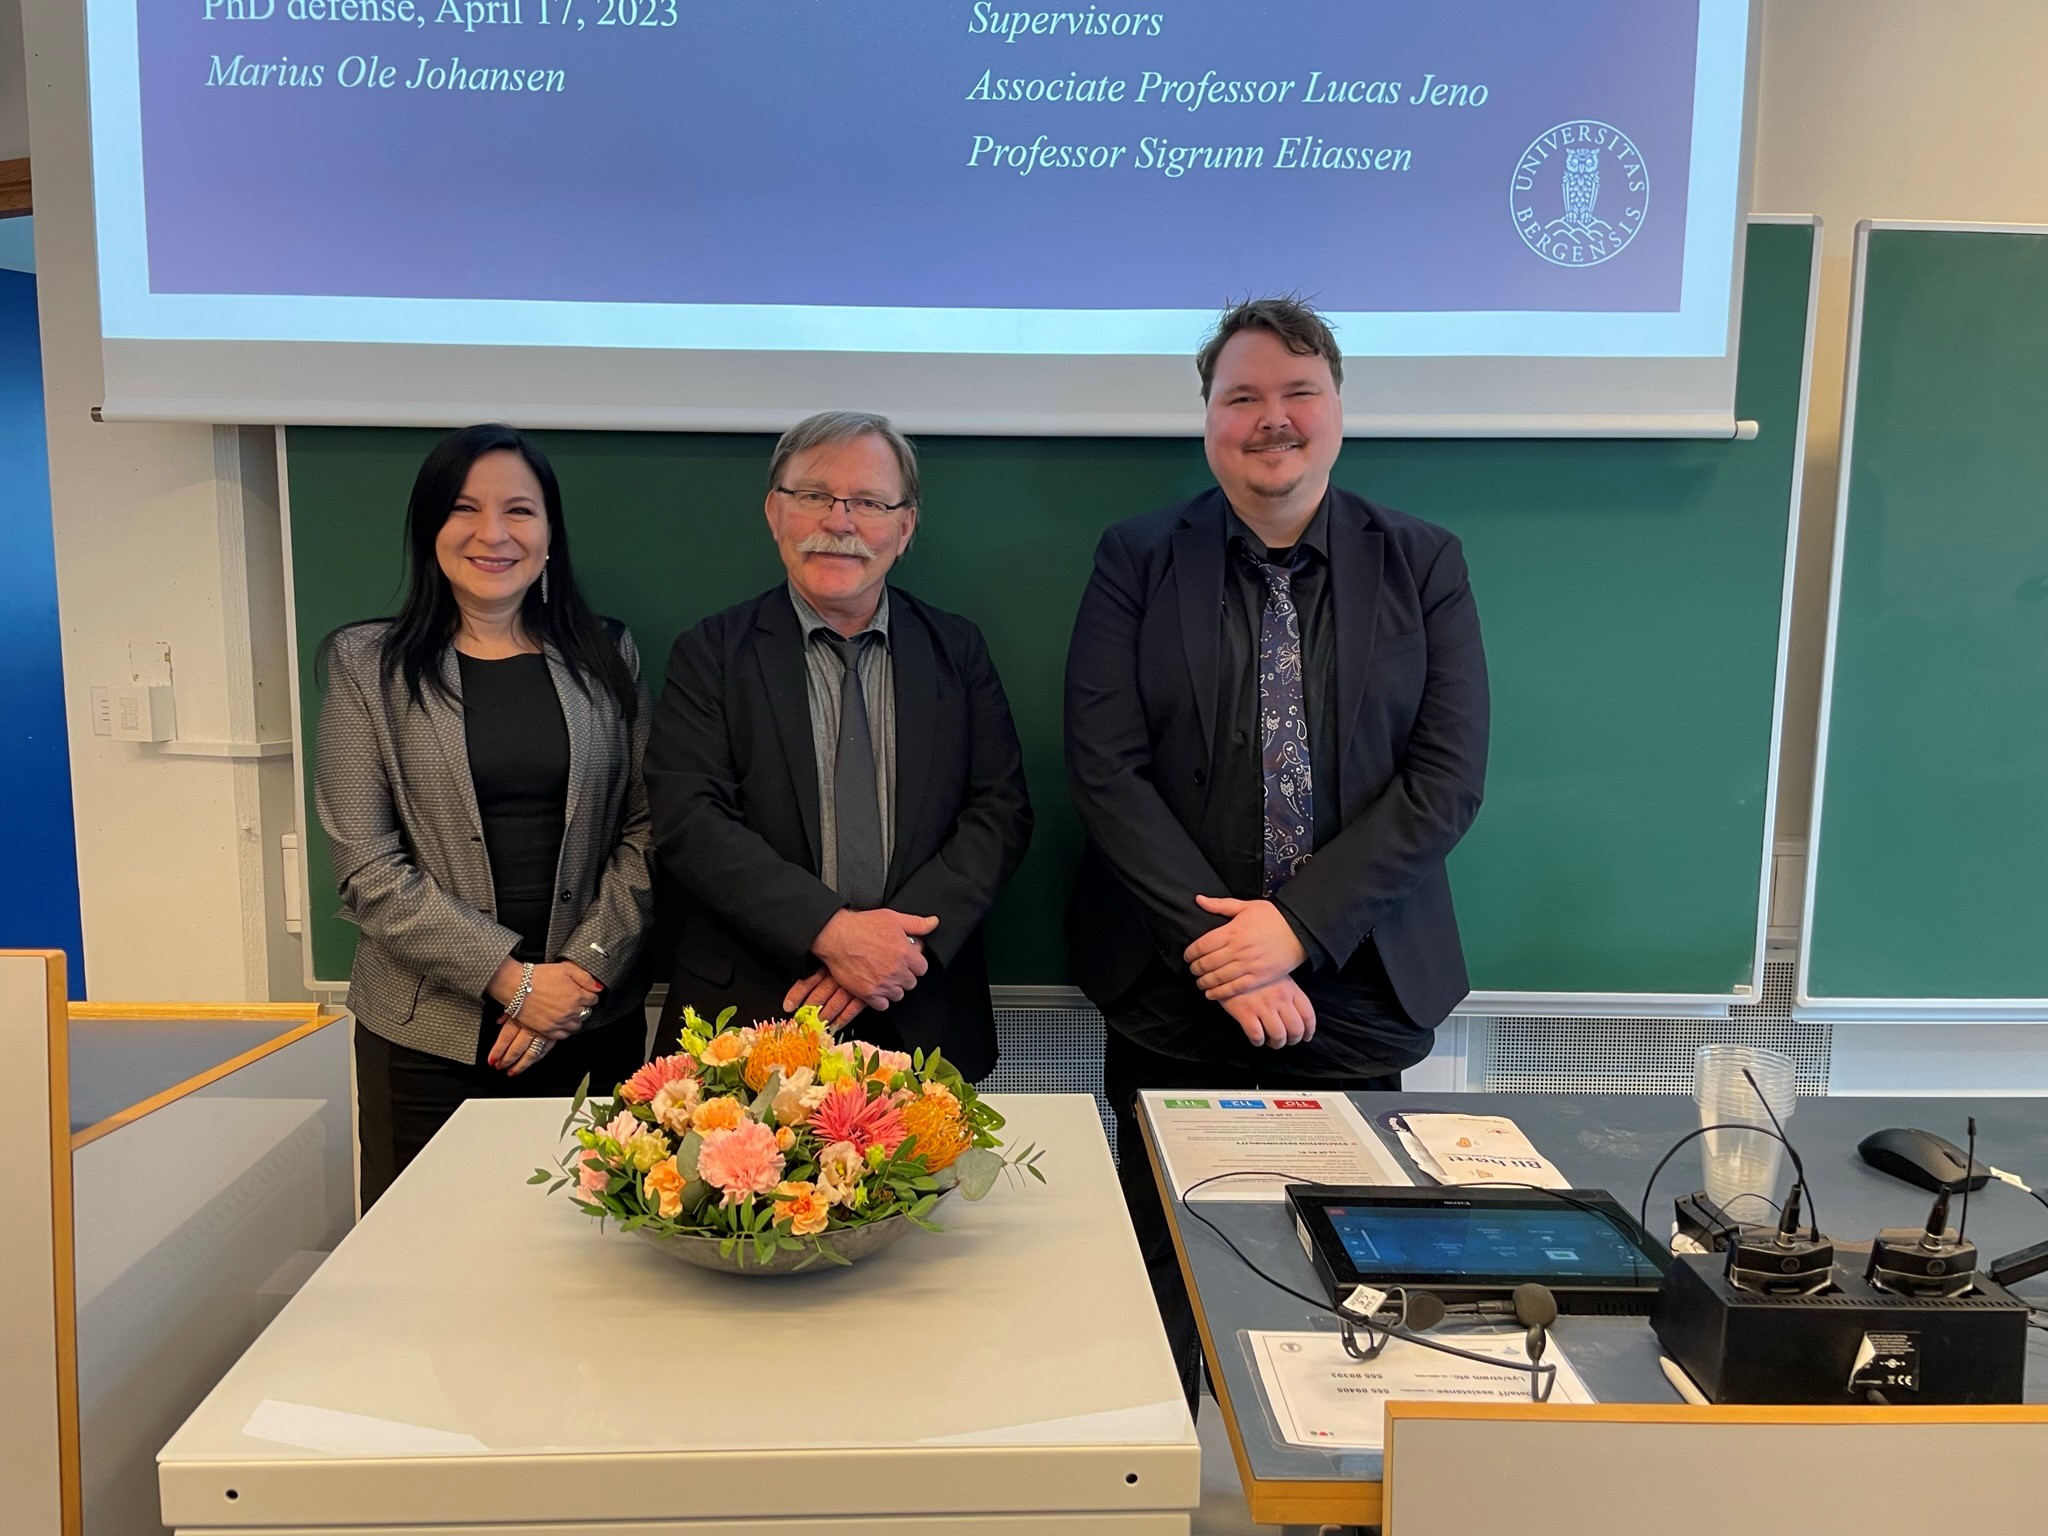 The photo shows Marius Ole Johansen and his opponents Professor Lennia Matos Fernandez and Professor Halgeir Halvari